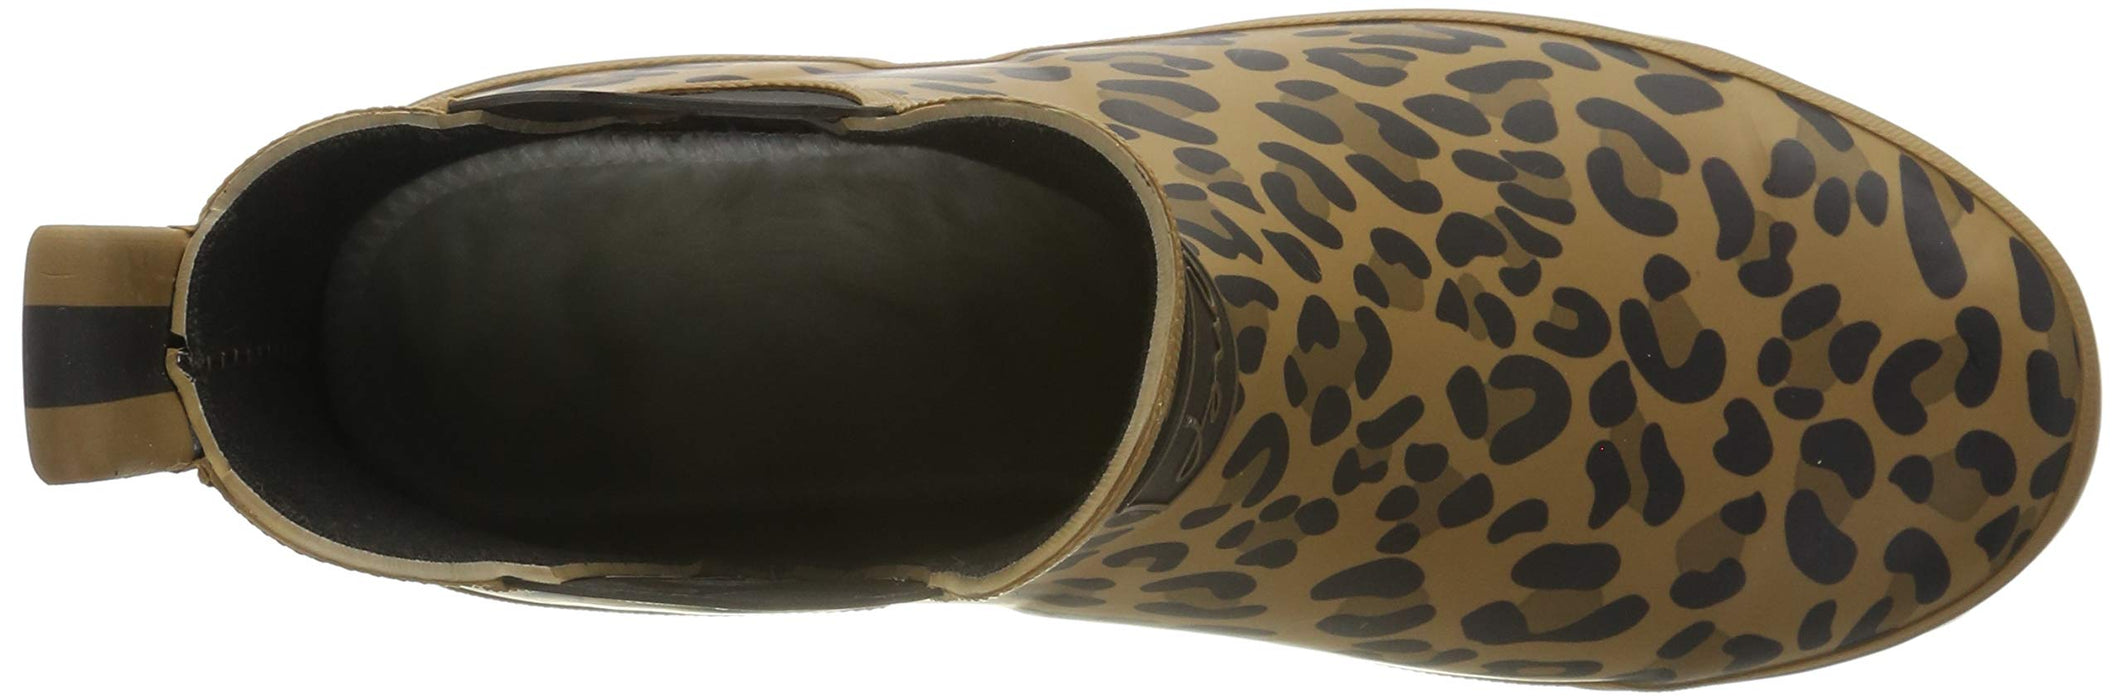 Joules Women's Wellibob Tan Leopard Size 6 Short Height Rain Boot